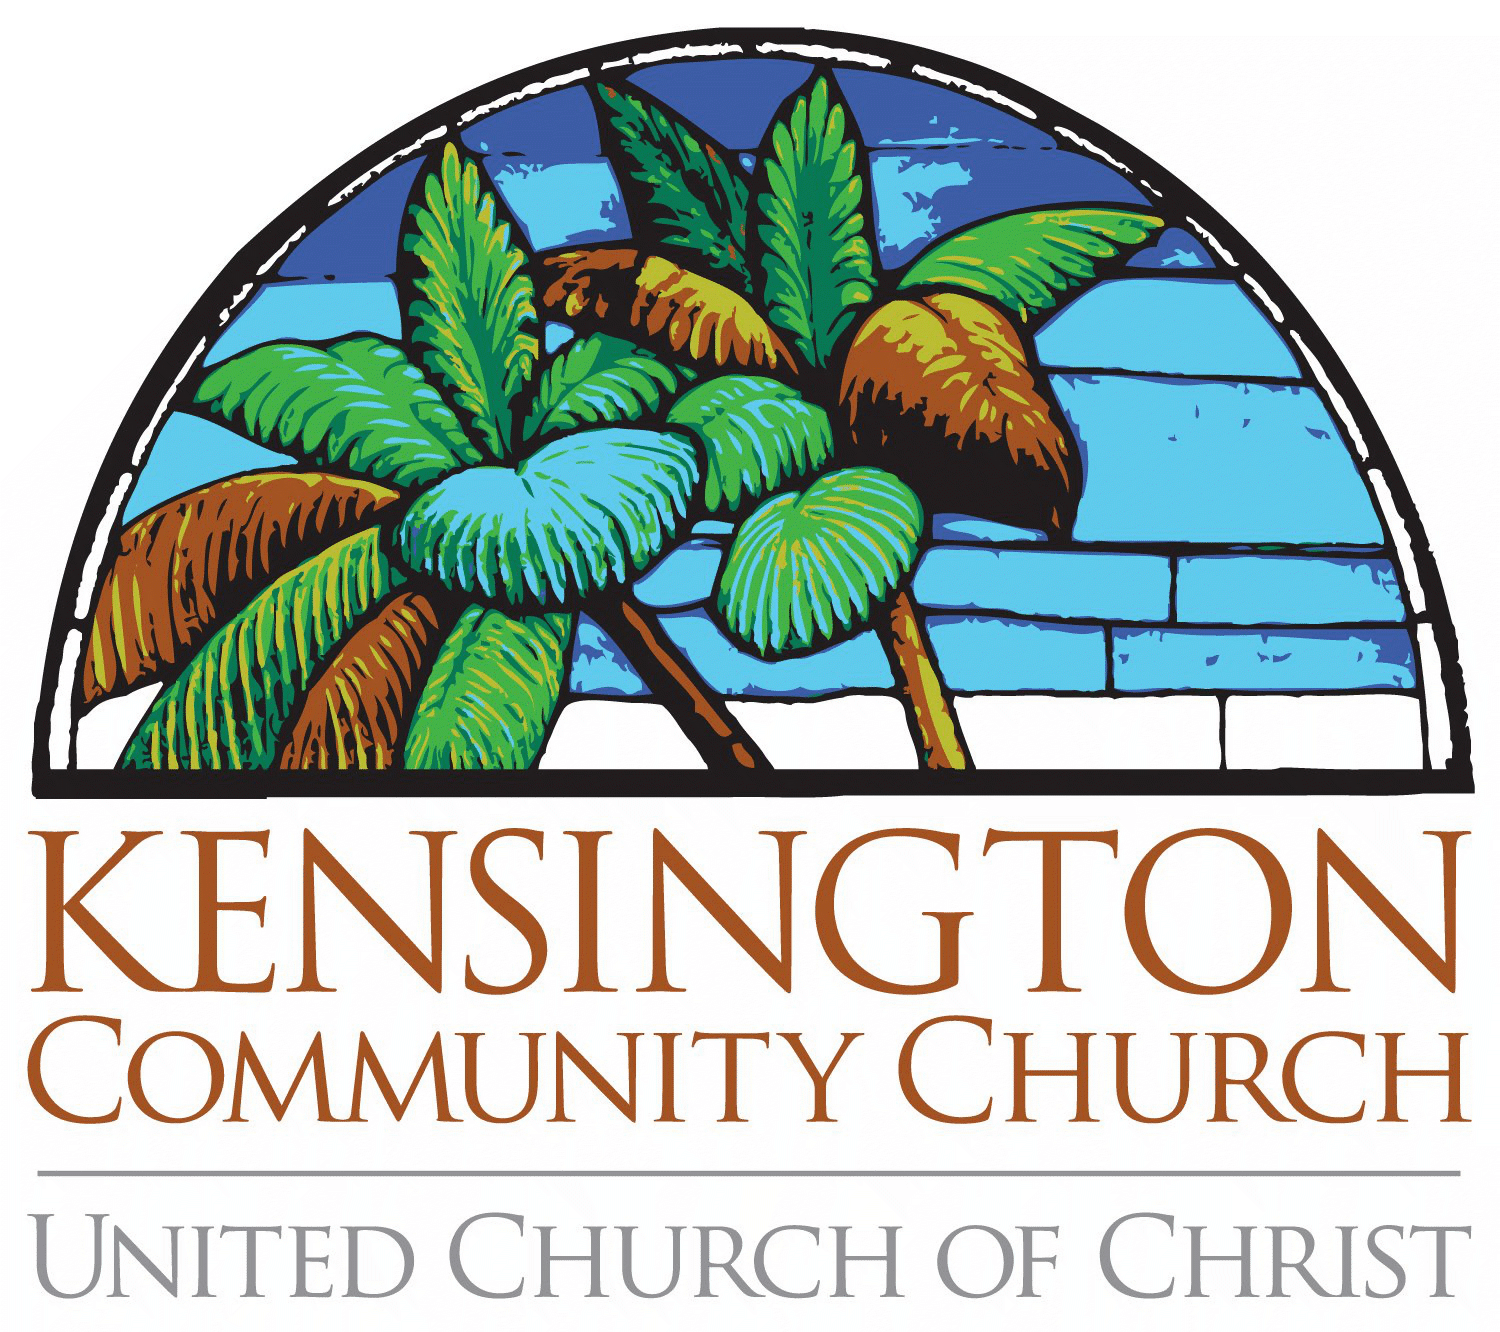 Kensington Community Church